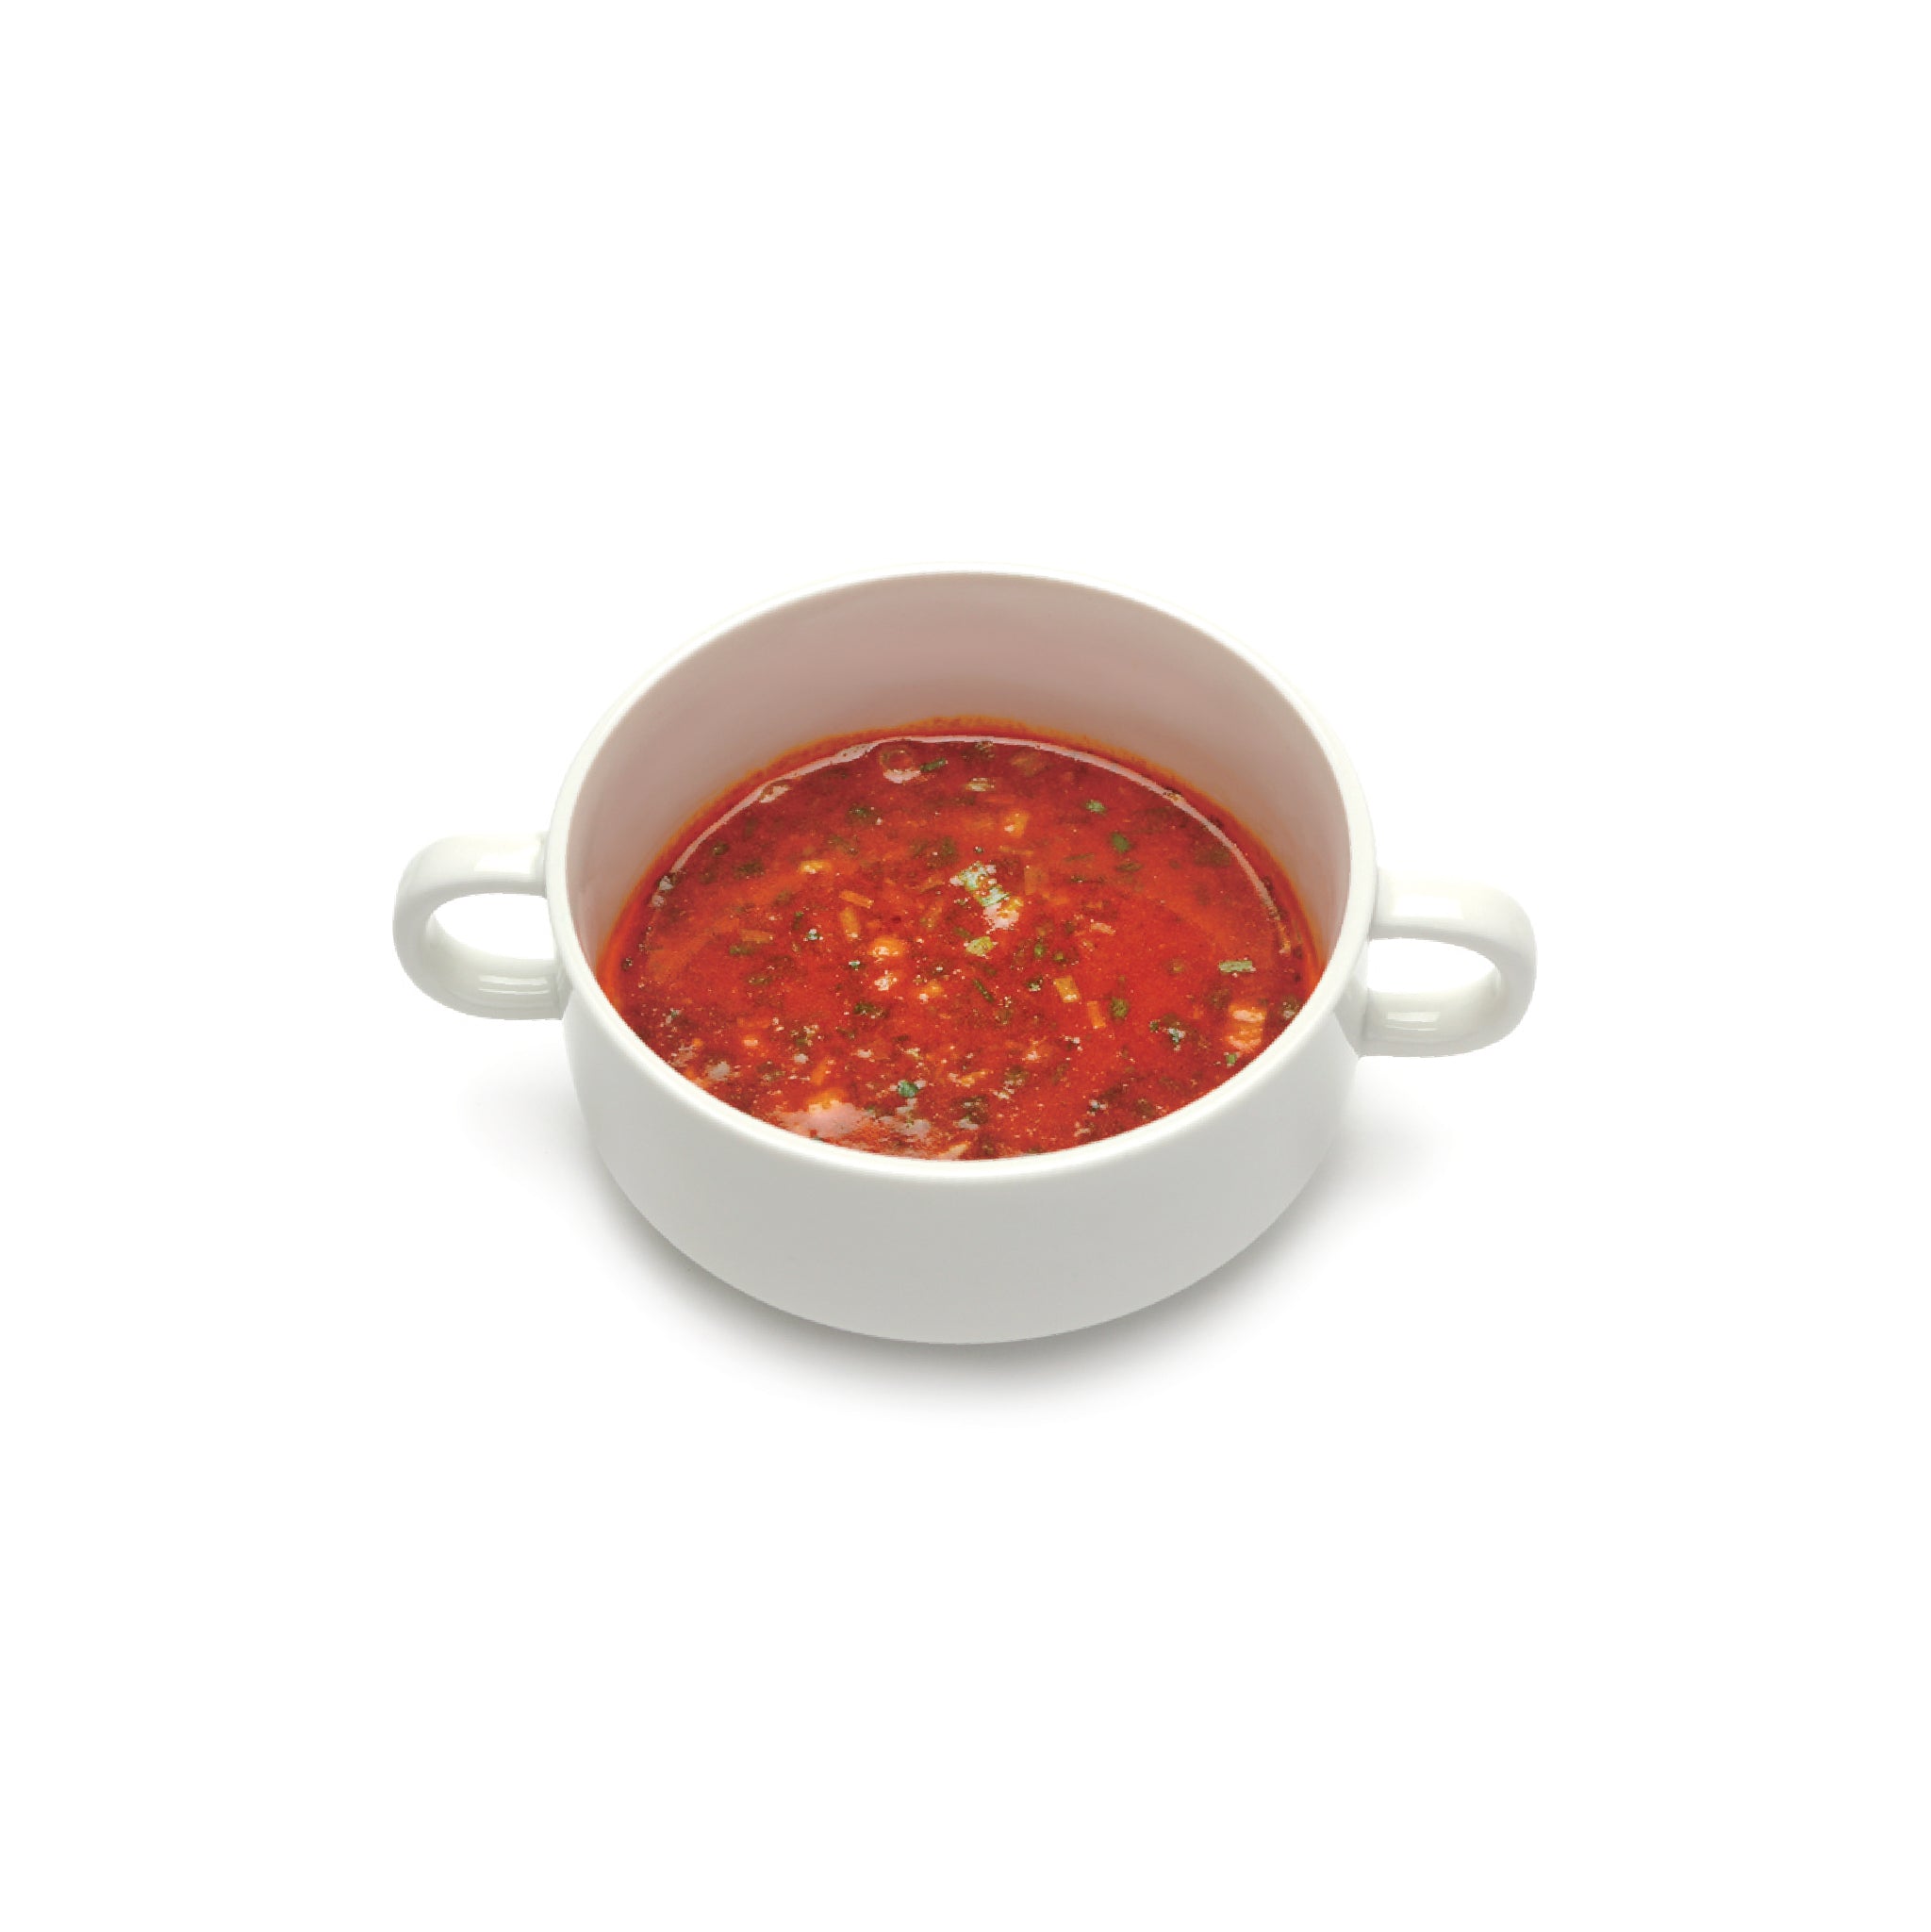 Spicy Soup Set 02